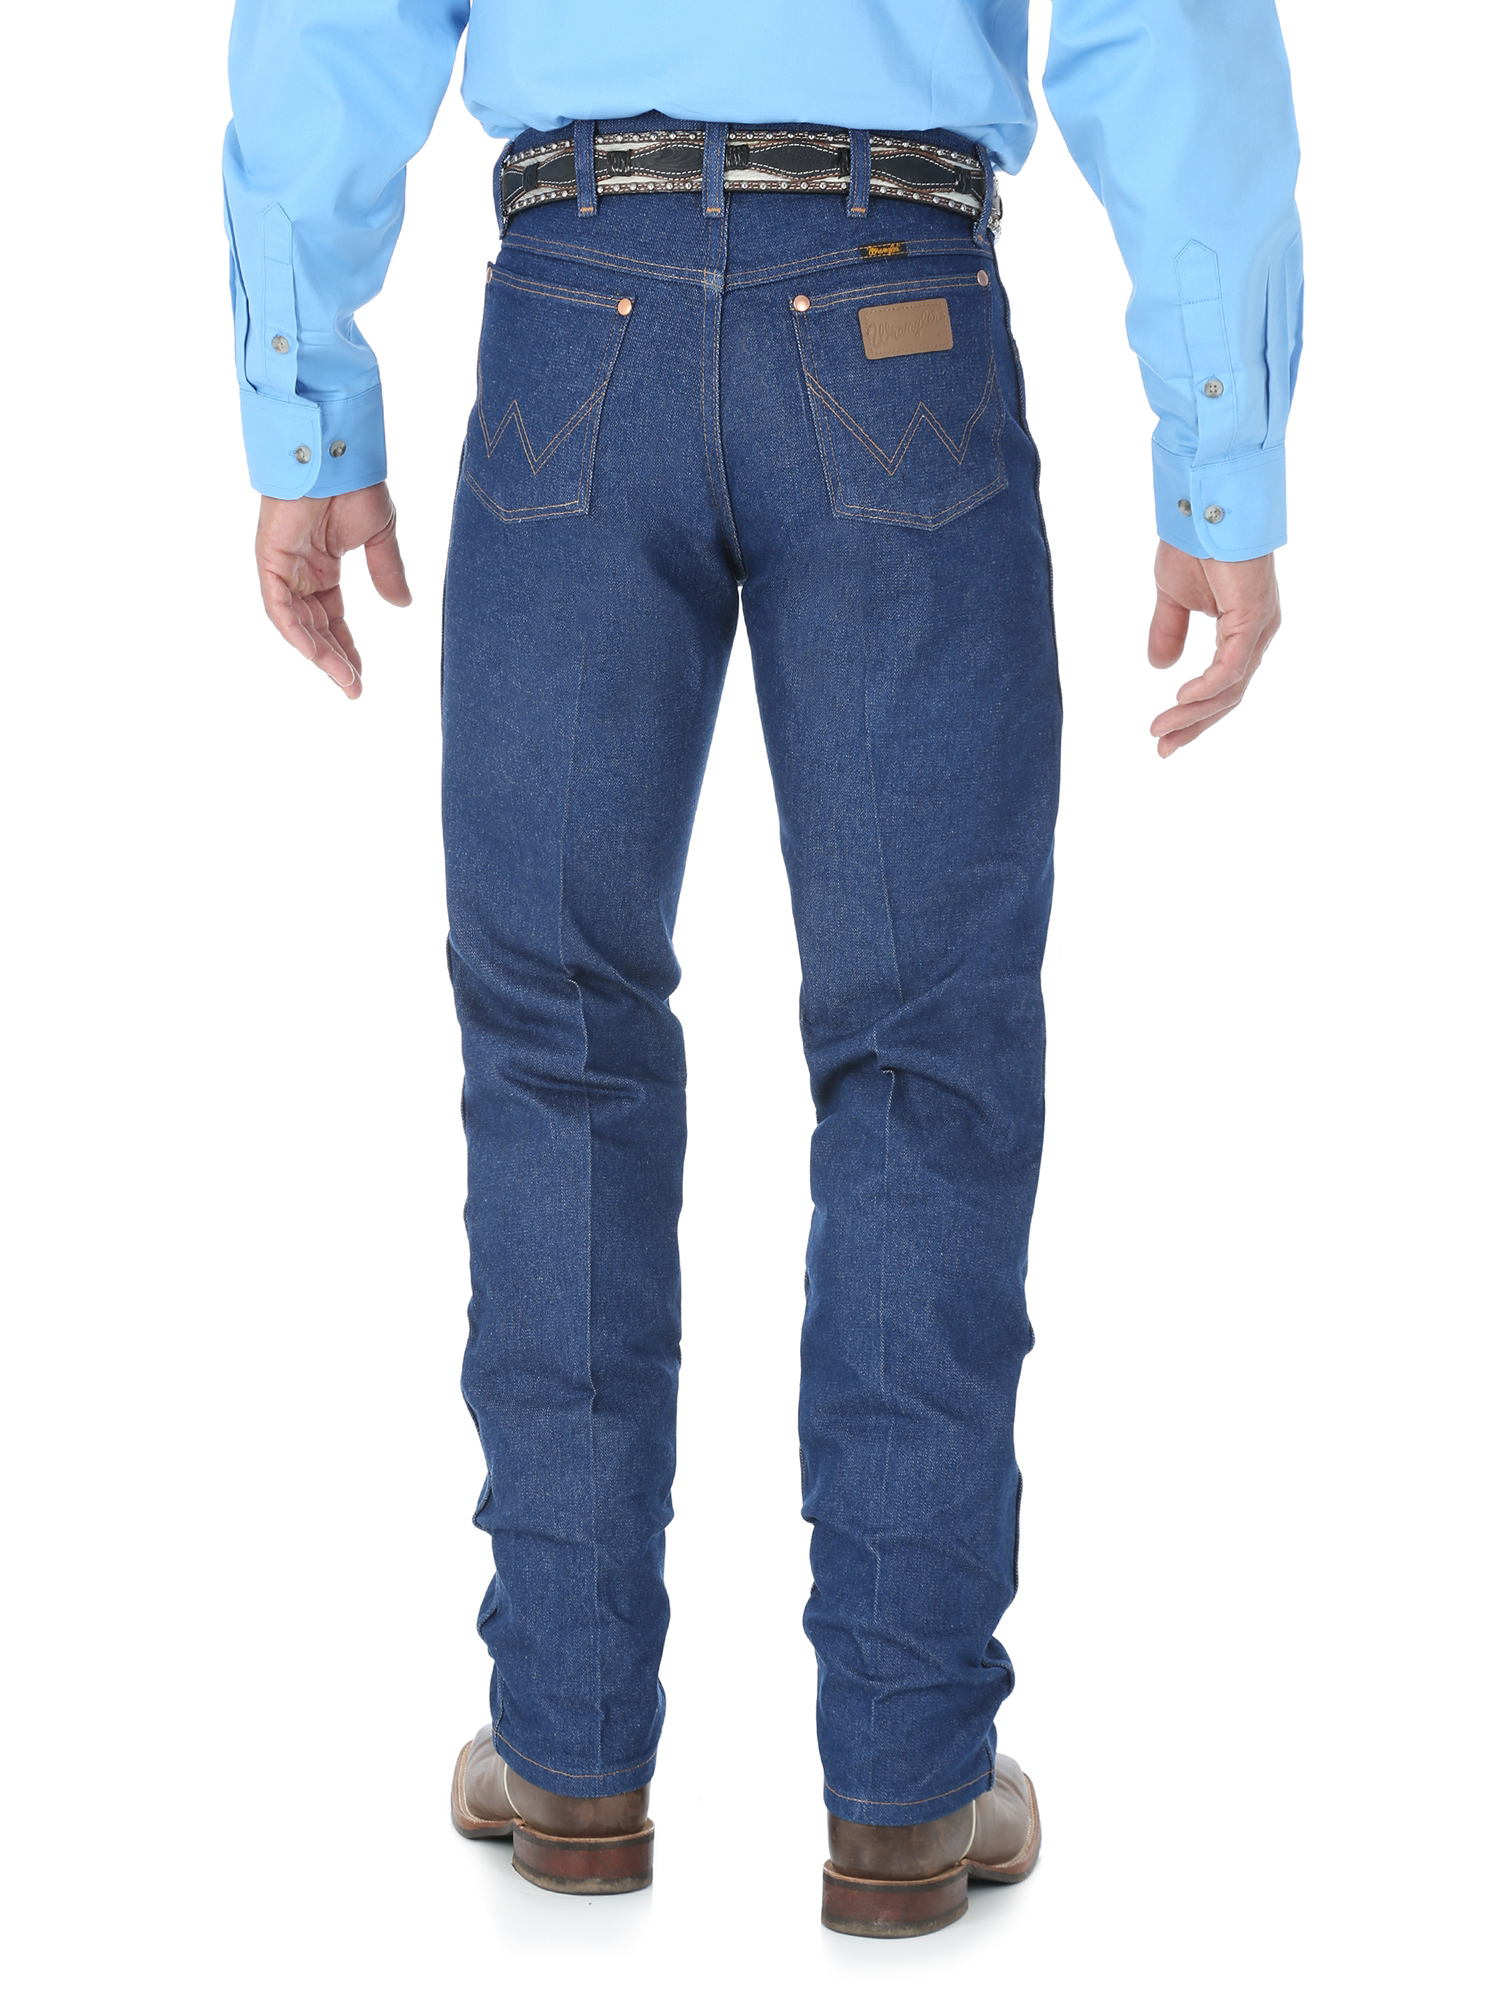 Wrangler Men's Cowboy Cut Original Fit Jean - image 4 of 4